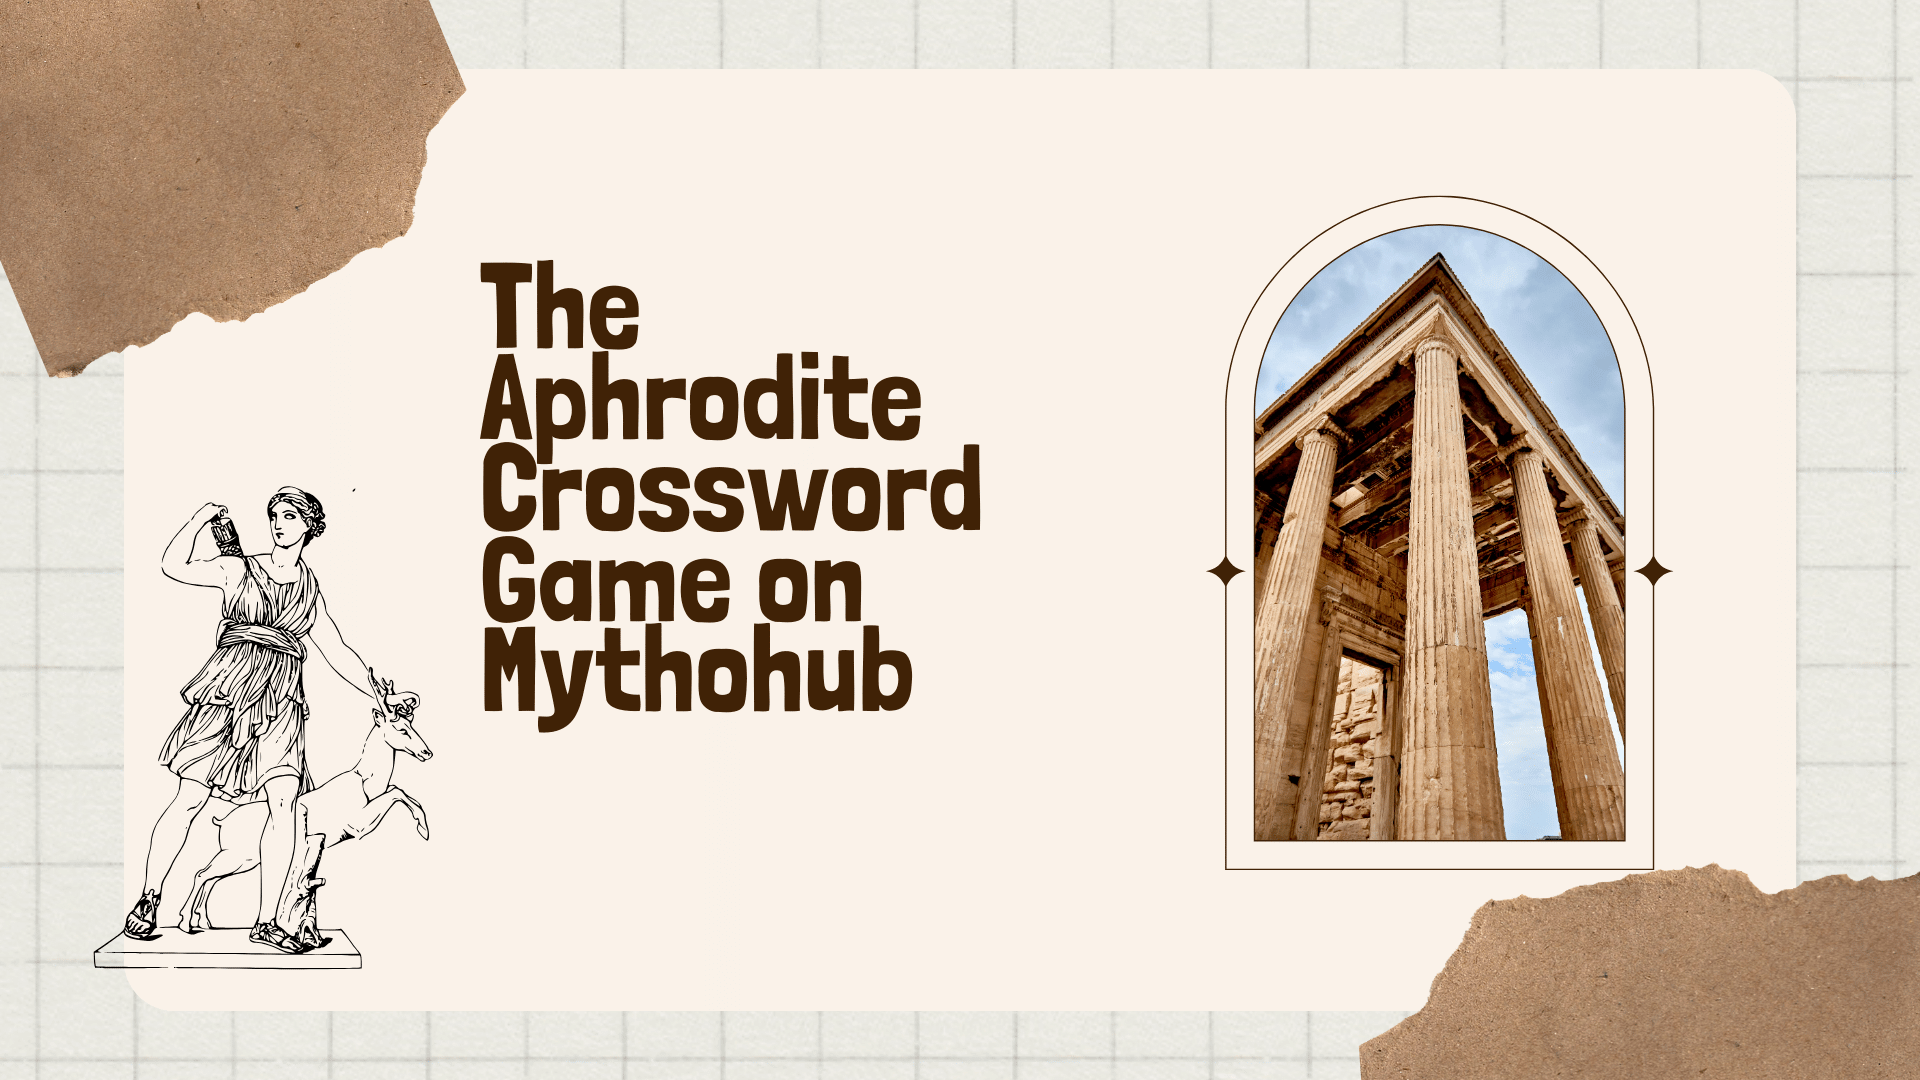 The Aphrodite Crossword Game on Mythohub